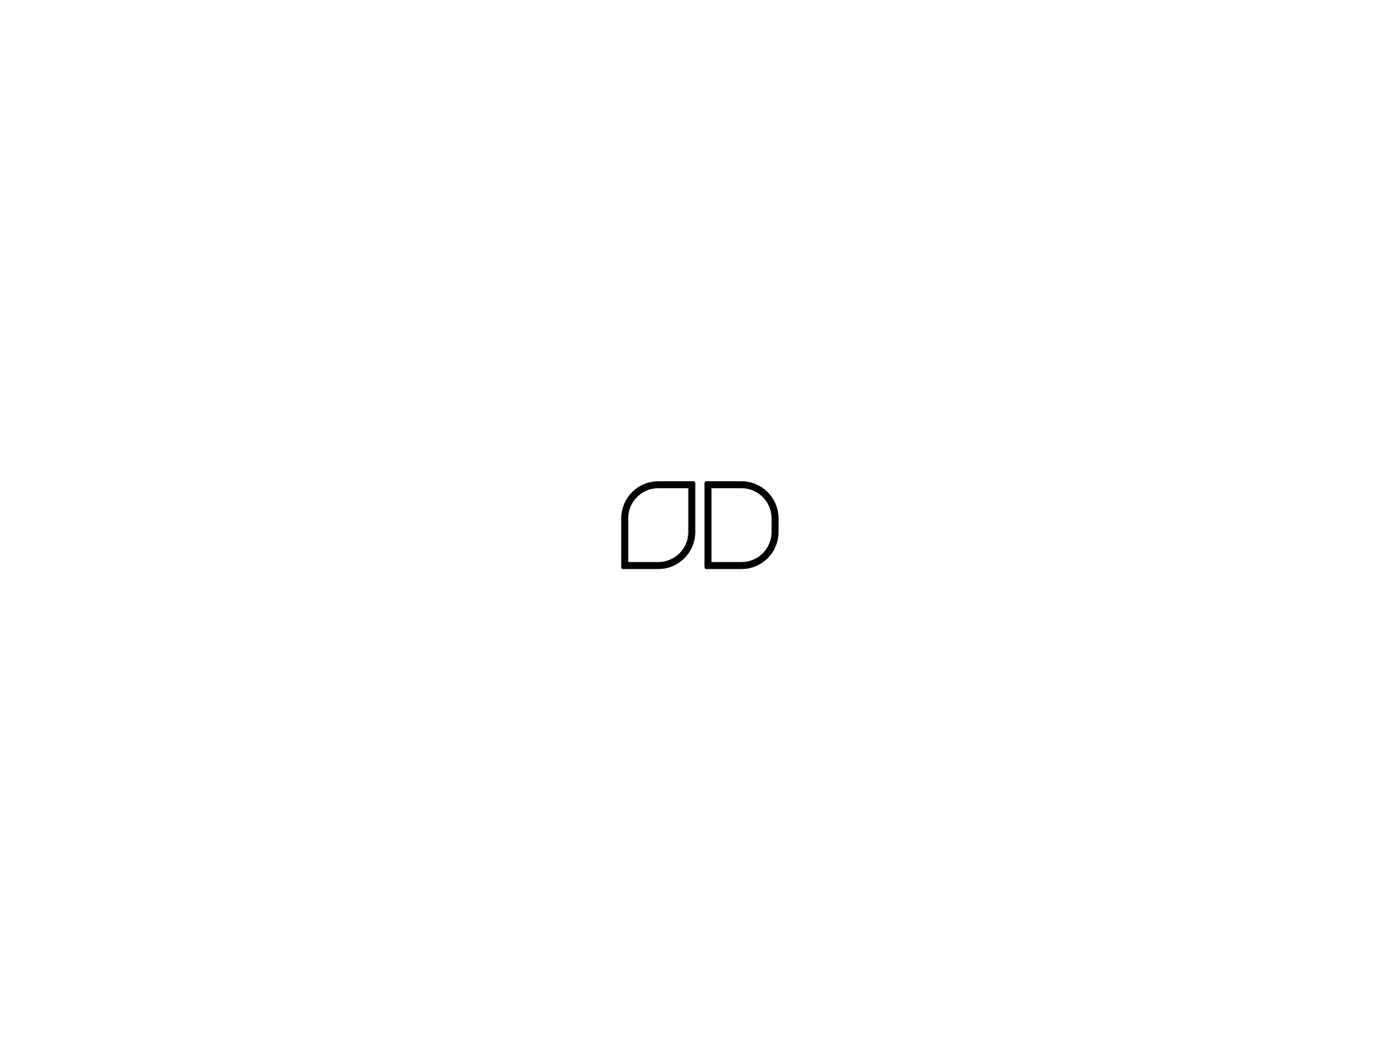 SD monogram logo